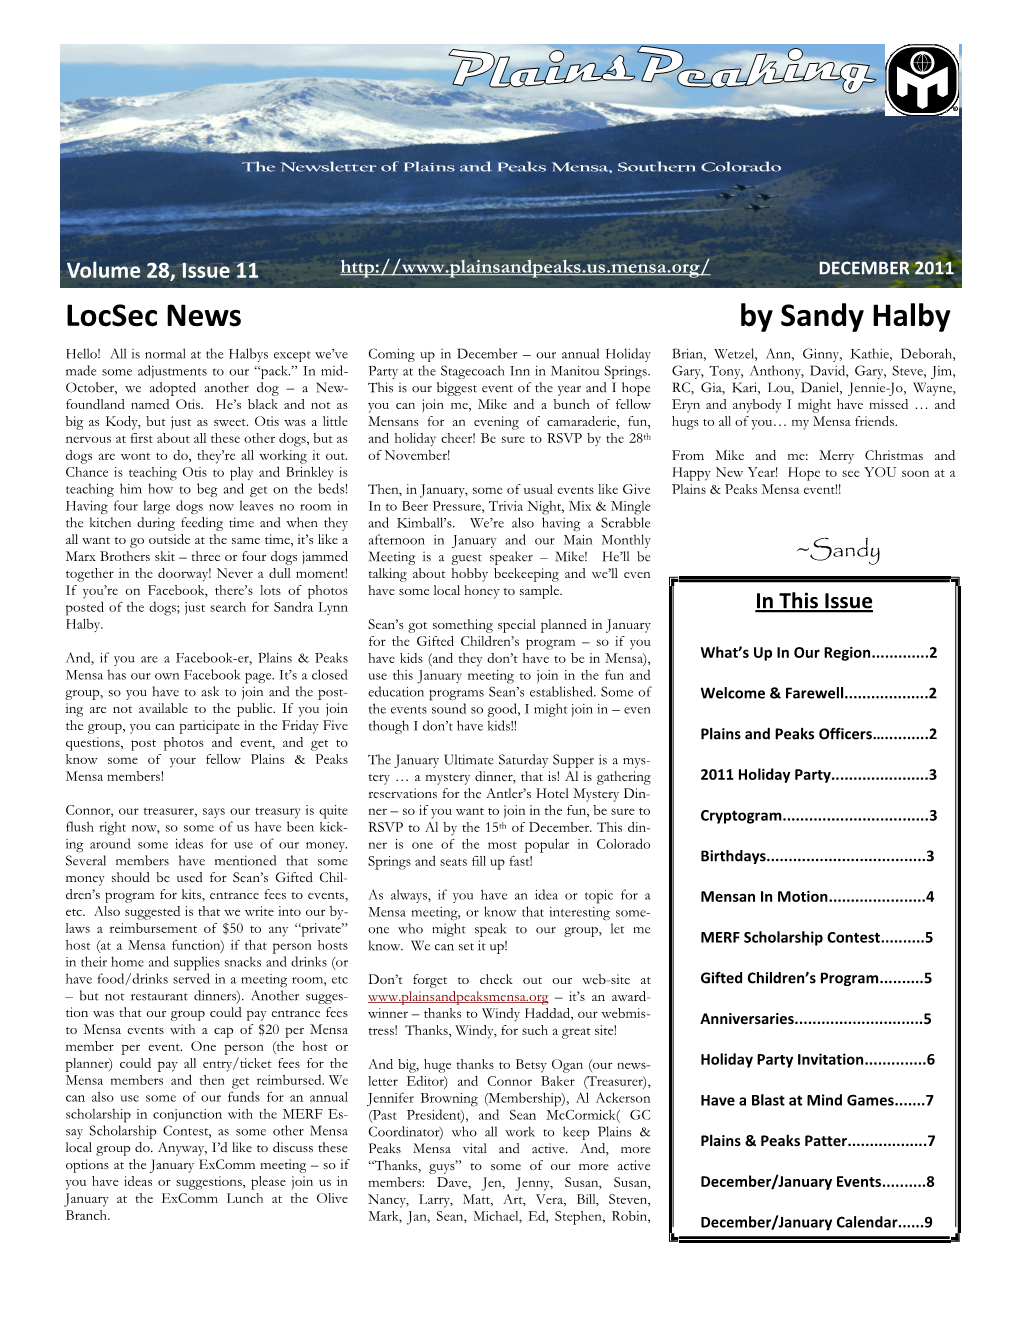 Locsec News by Sandy Halby